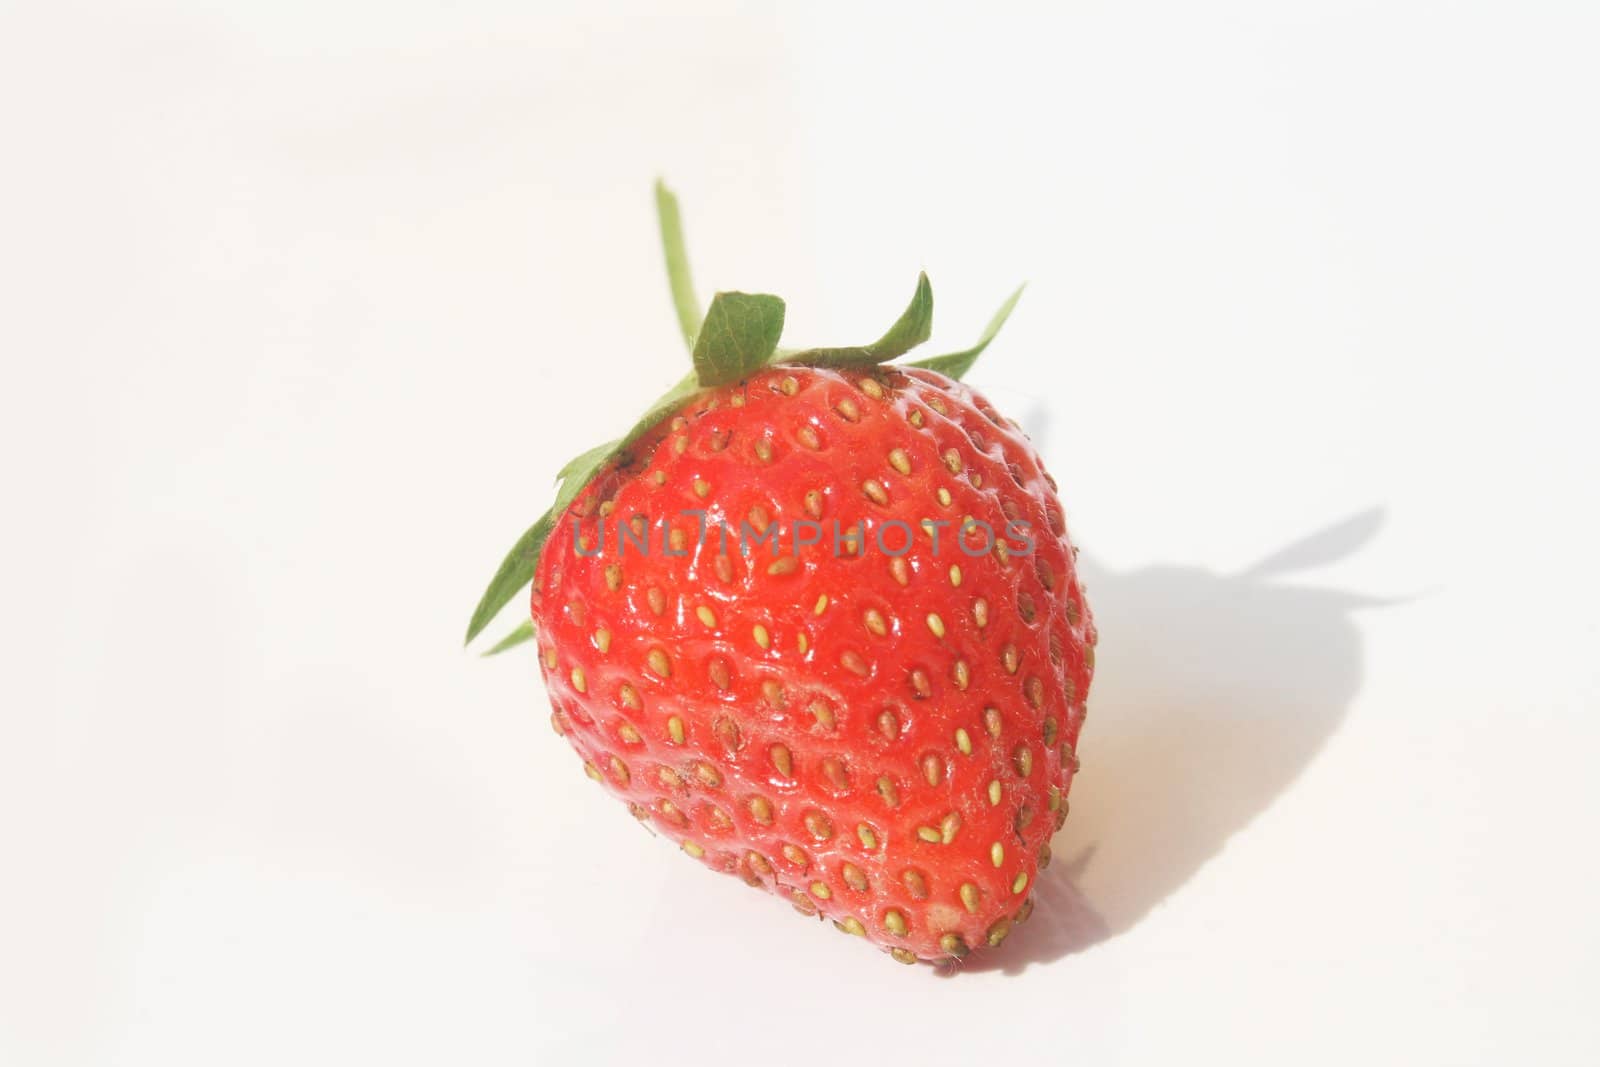 Single strawberry against white background